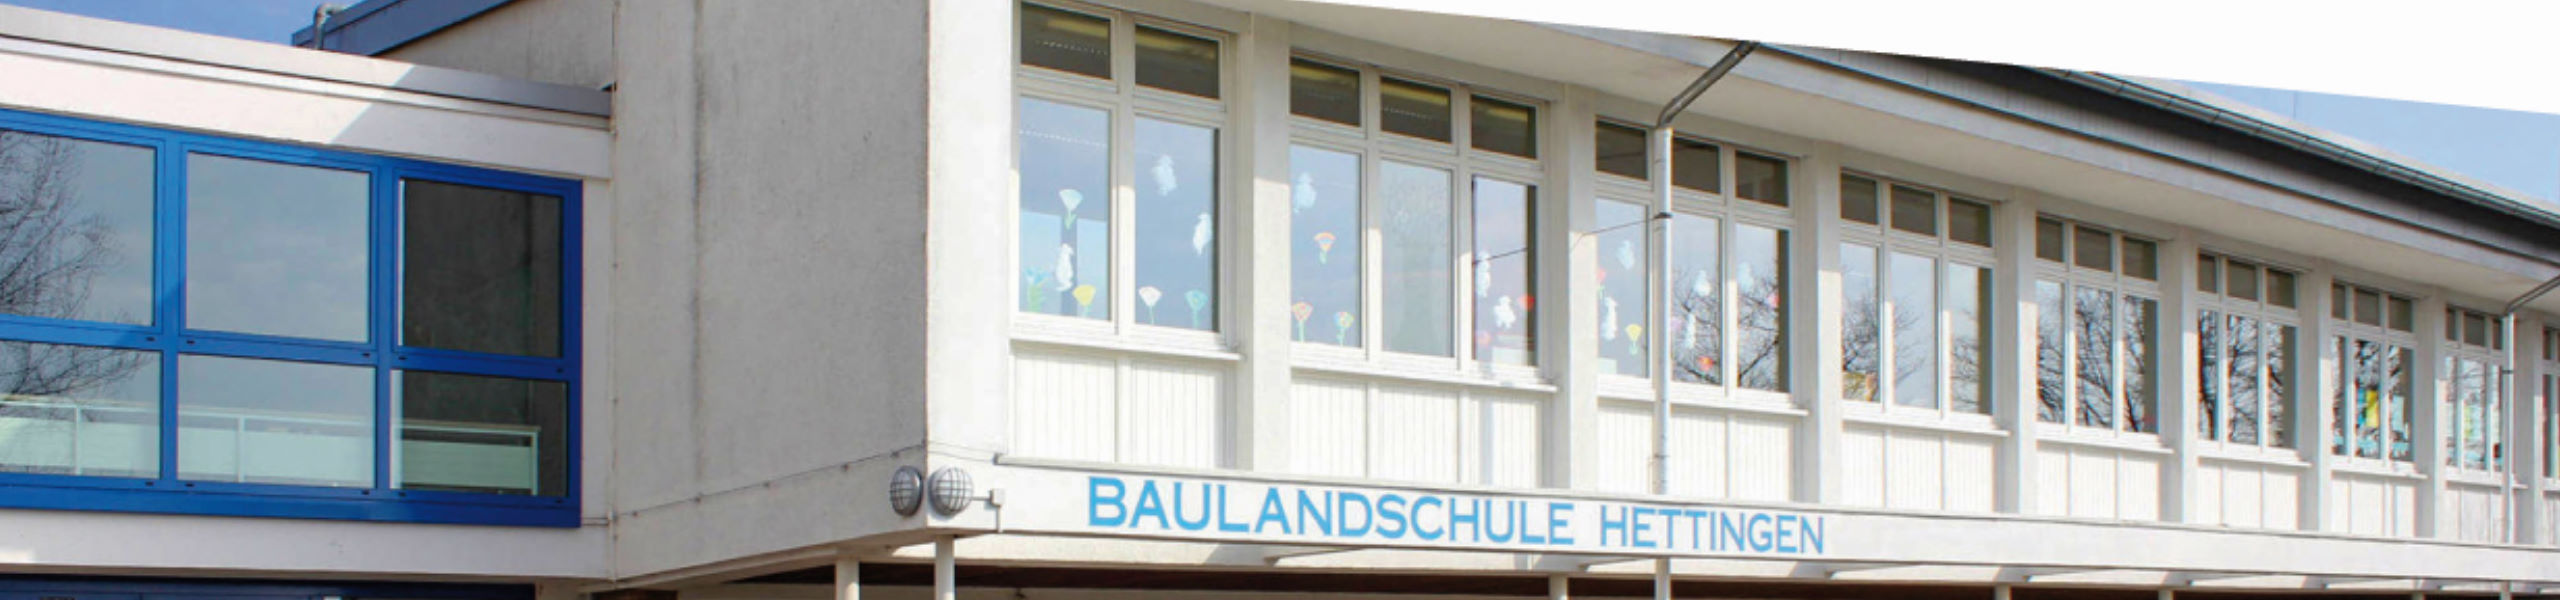 Baulandschule Hettingen - Förderverein